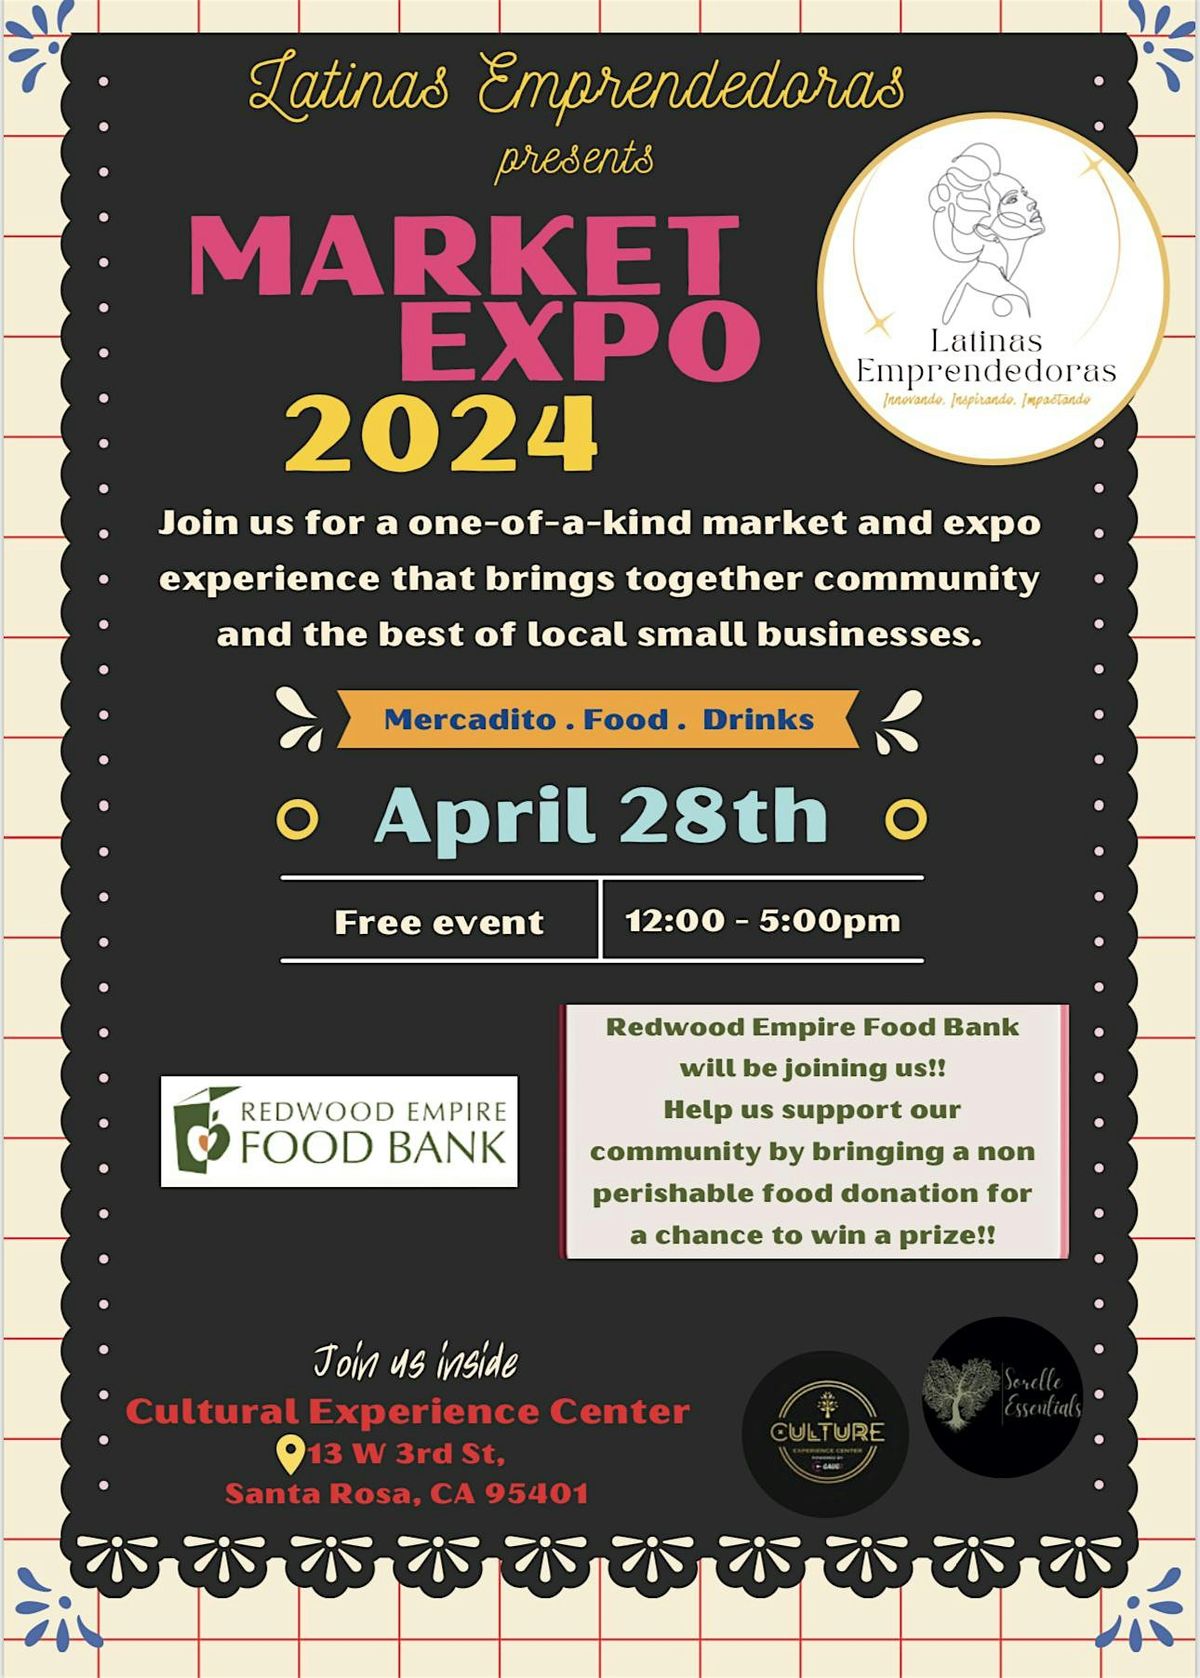 Latinas Emprendedoras presents Market Expo 2024